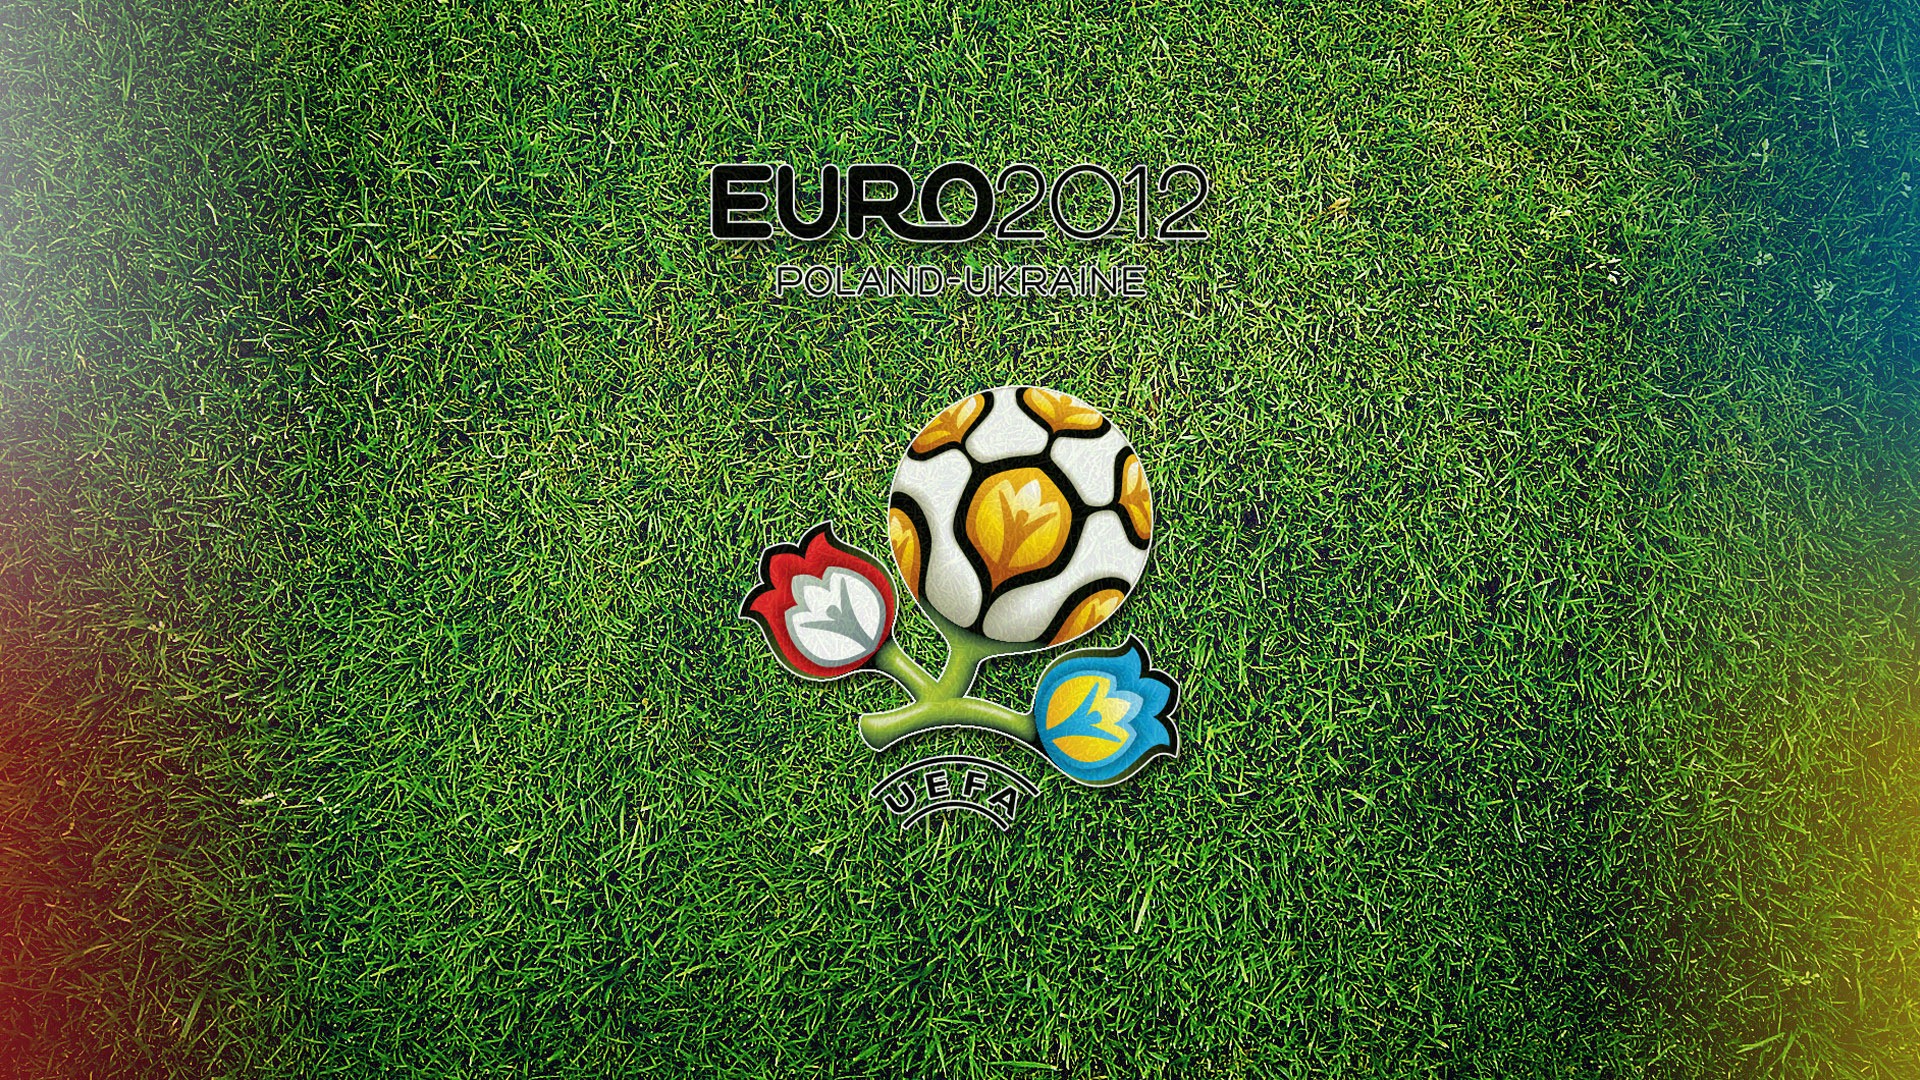 UEFA EURO 2012 欧洲足球锦标赛 高清壁纸(一)15 - 1920x1080